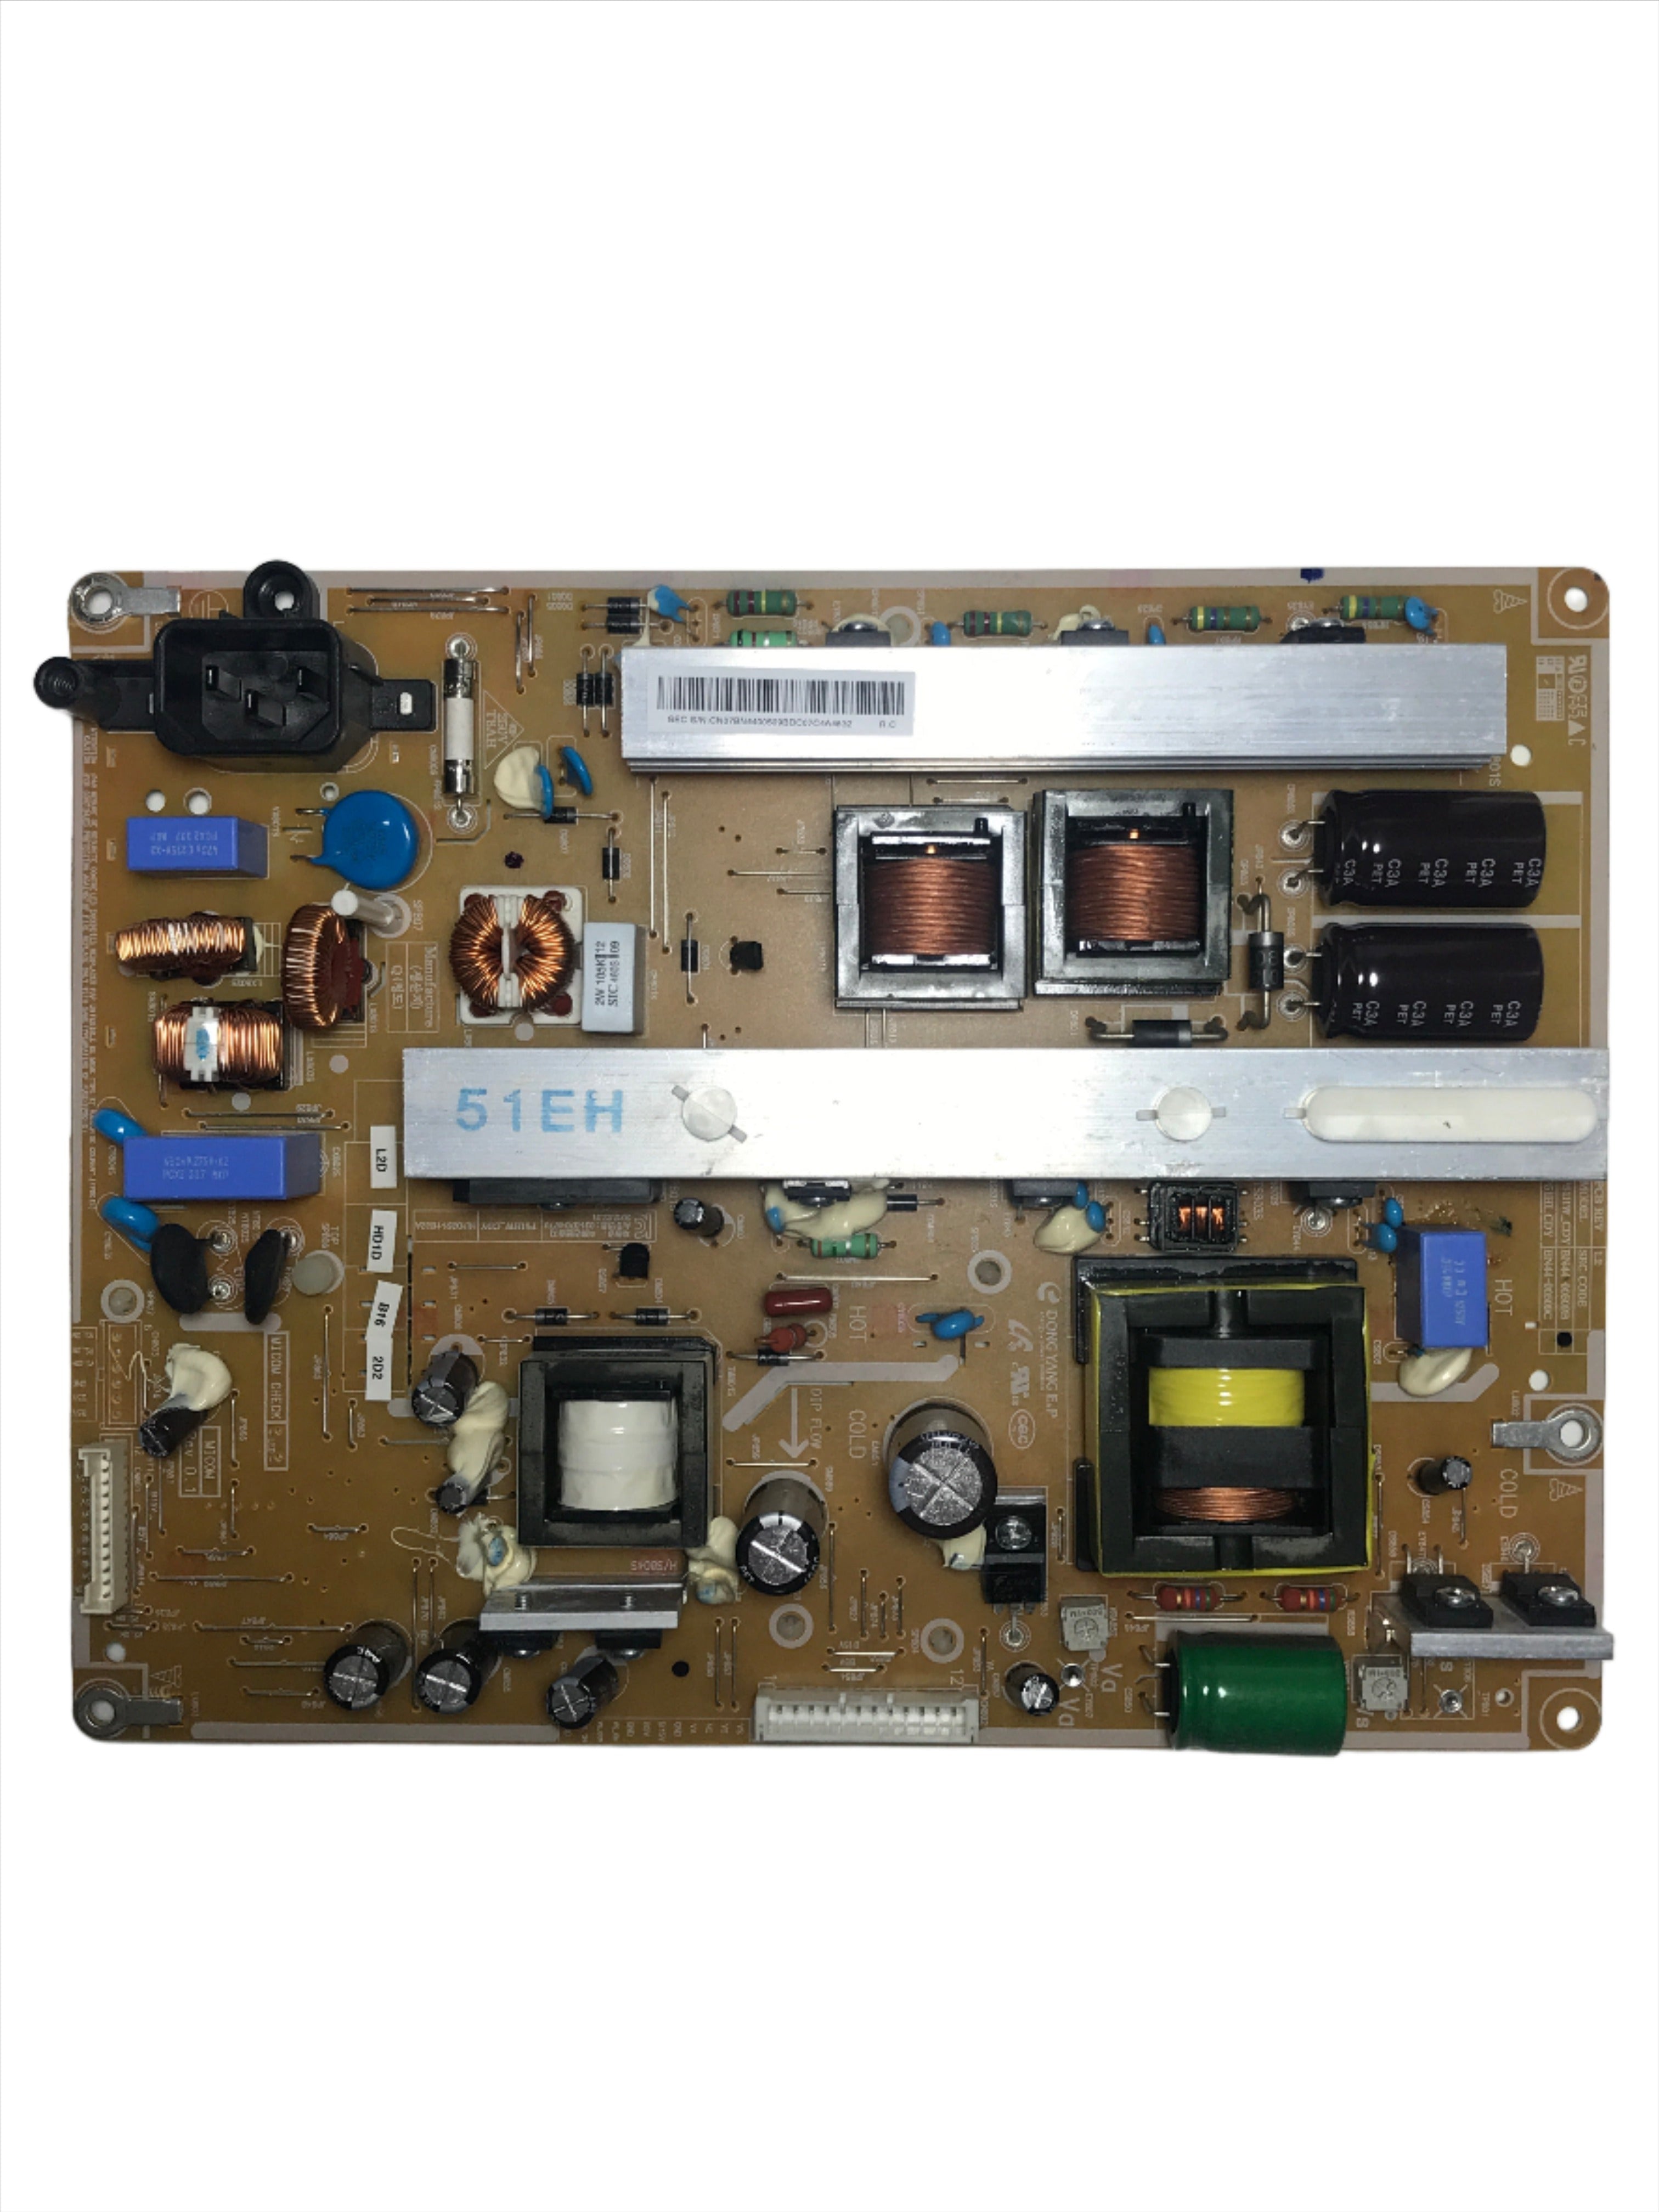 Samsung BN44-00509A  Power Supply Unit